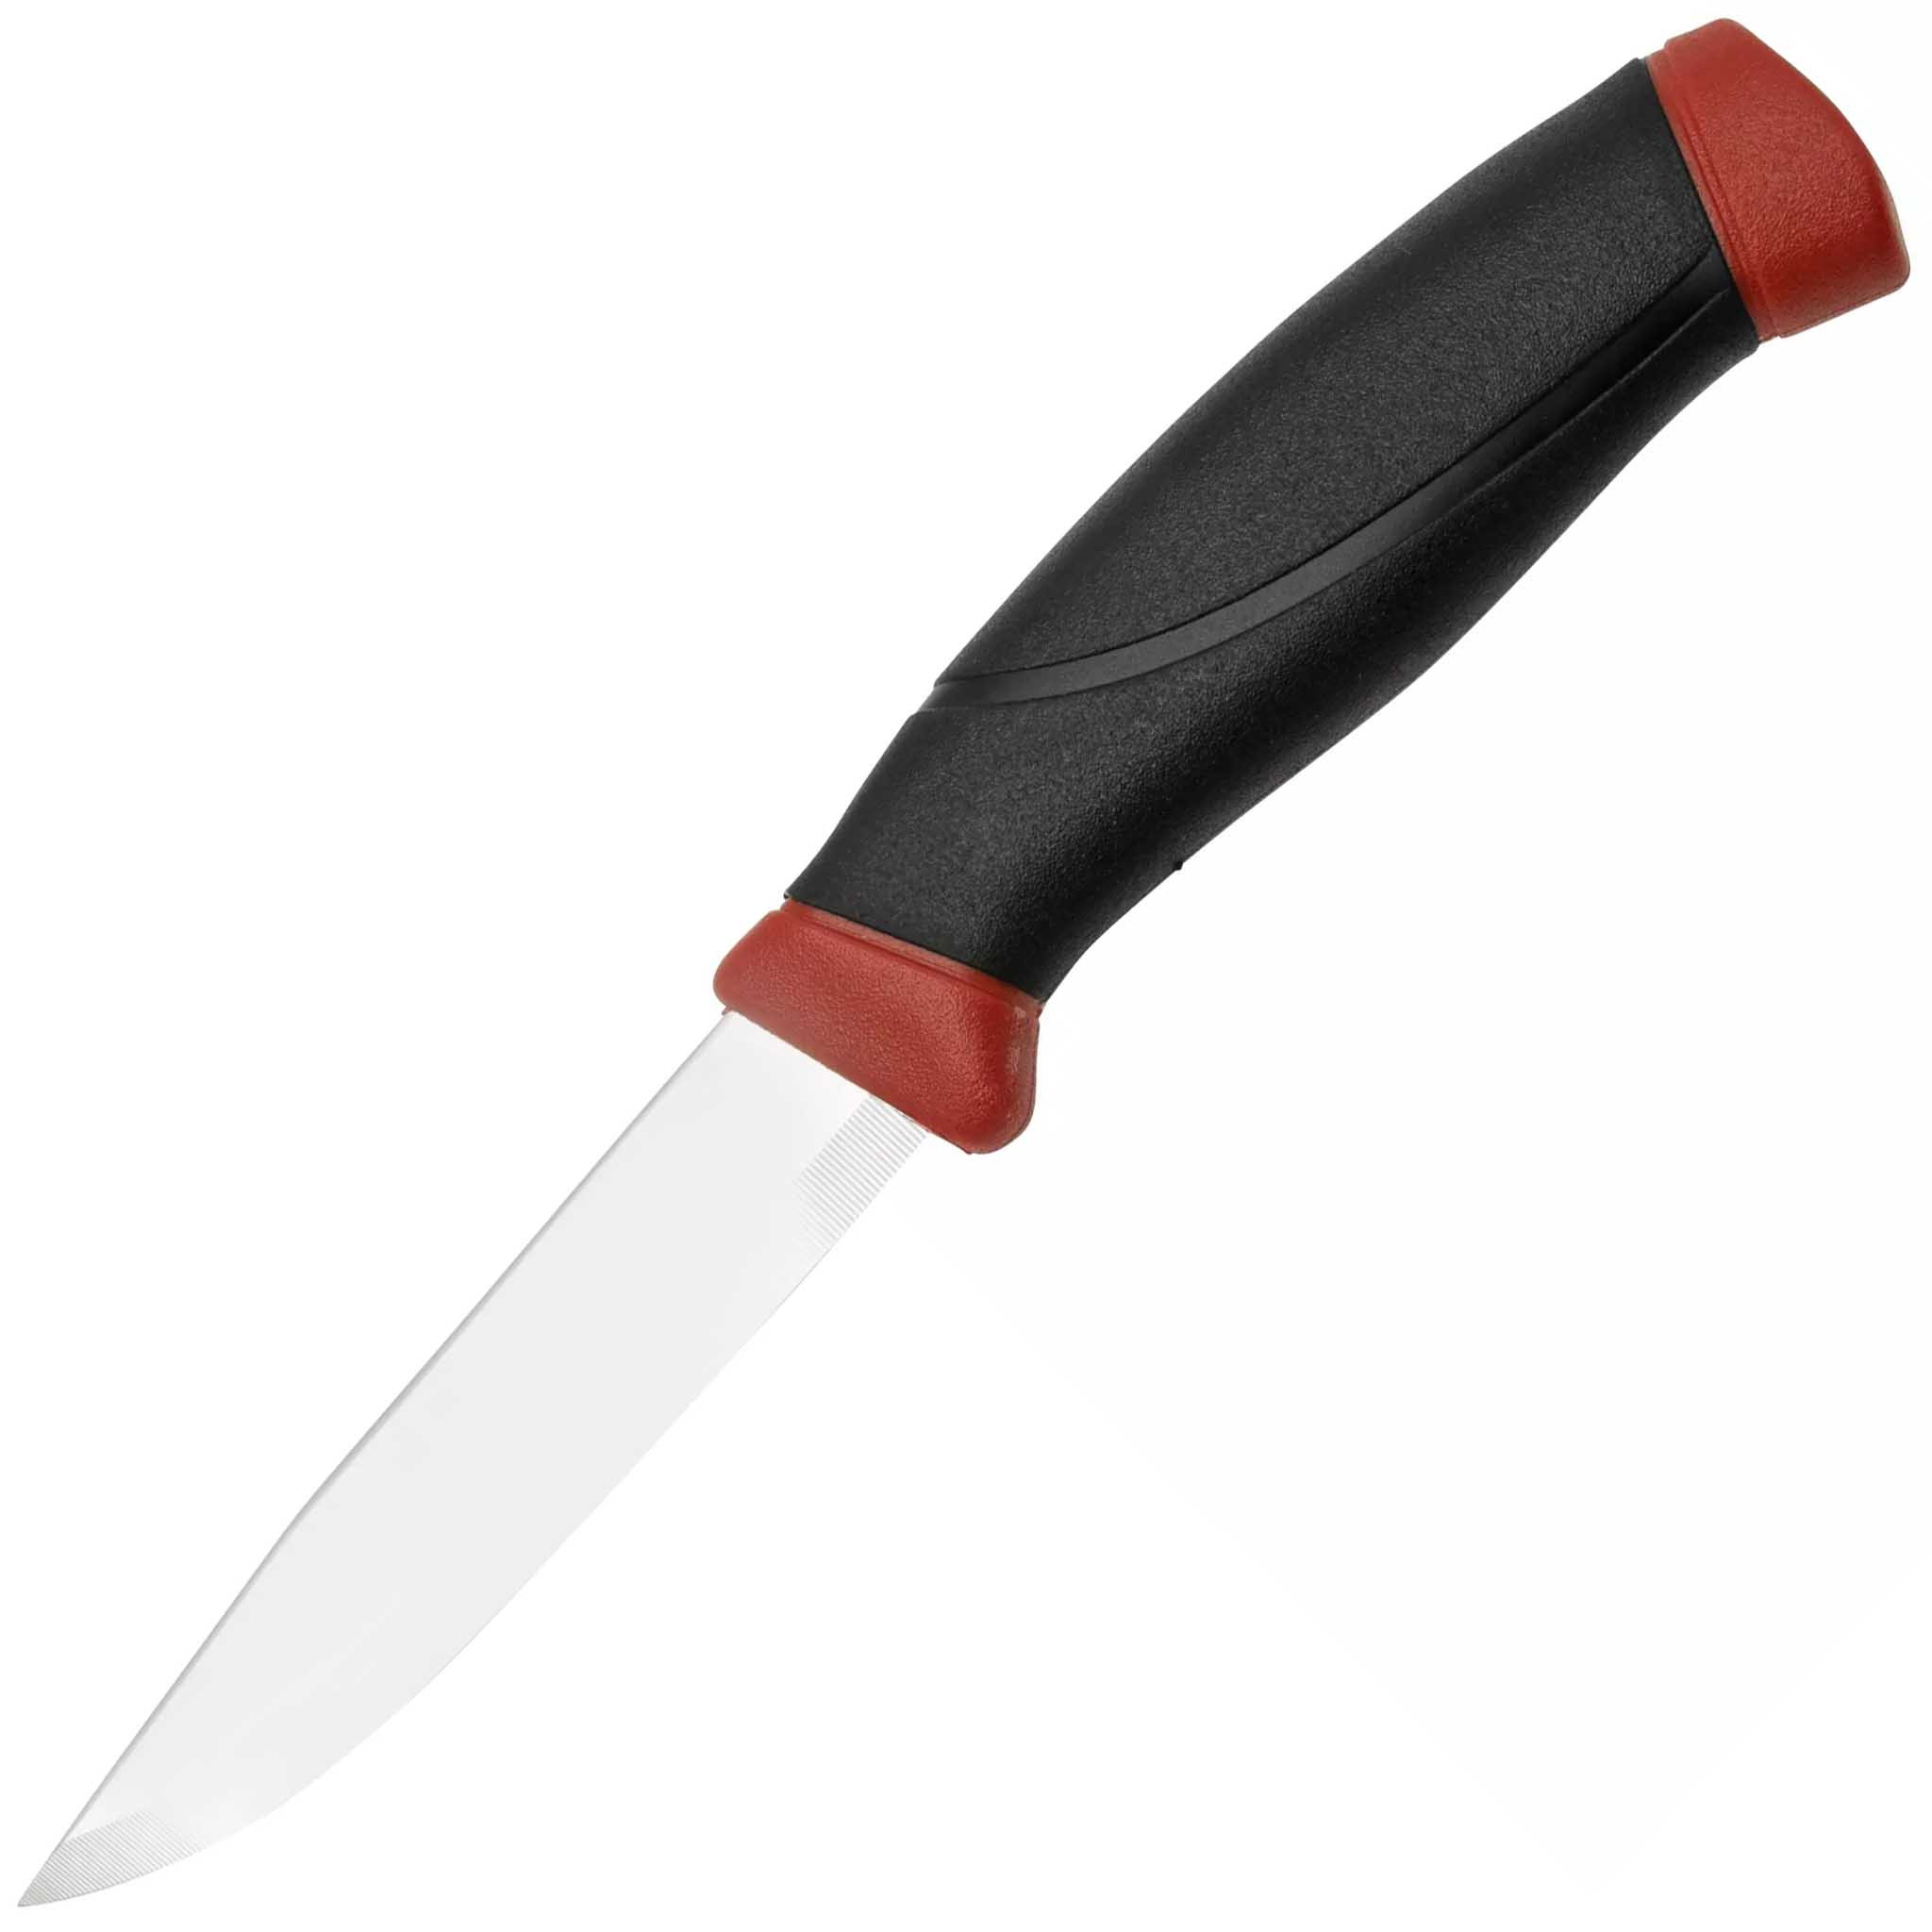 Нож с фиксированным лезвием Morakniv Companion, сталь Sandvik 12C27, рукоять резина, Dala red нож sanitoo с фиксированным трапециевидным лезвием